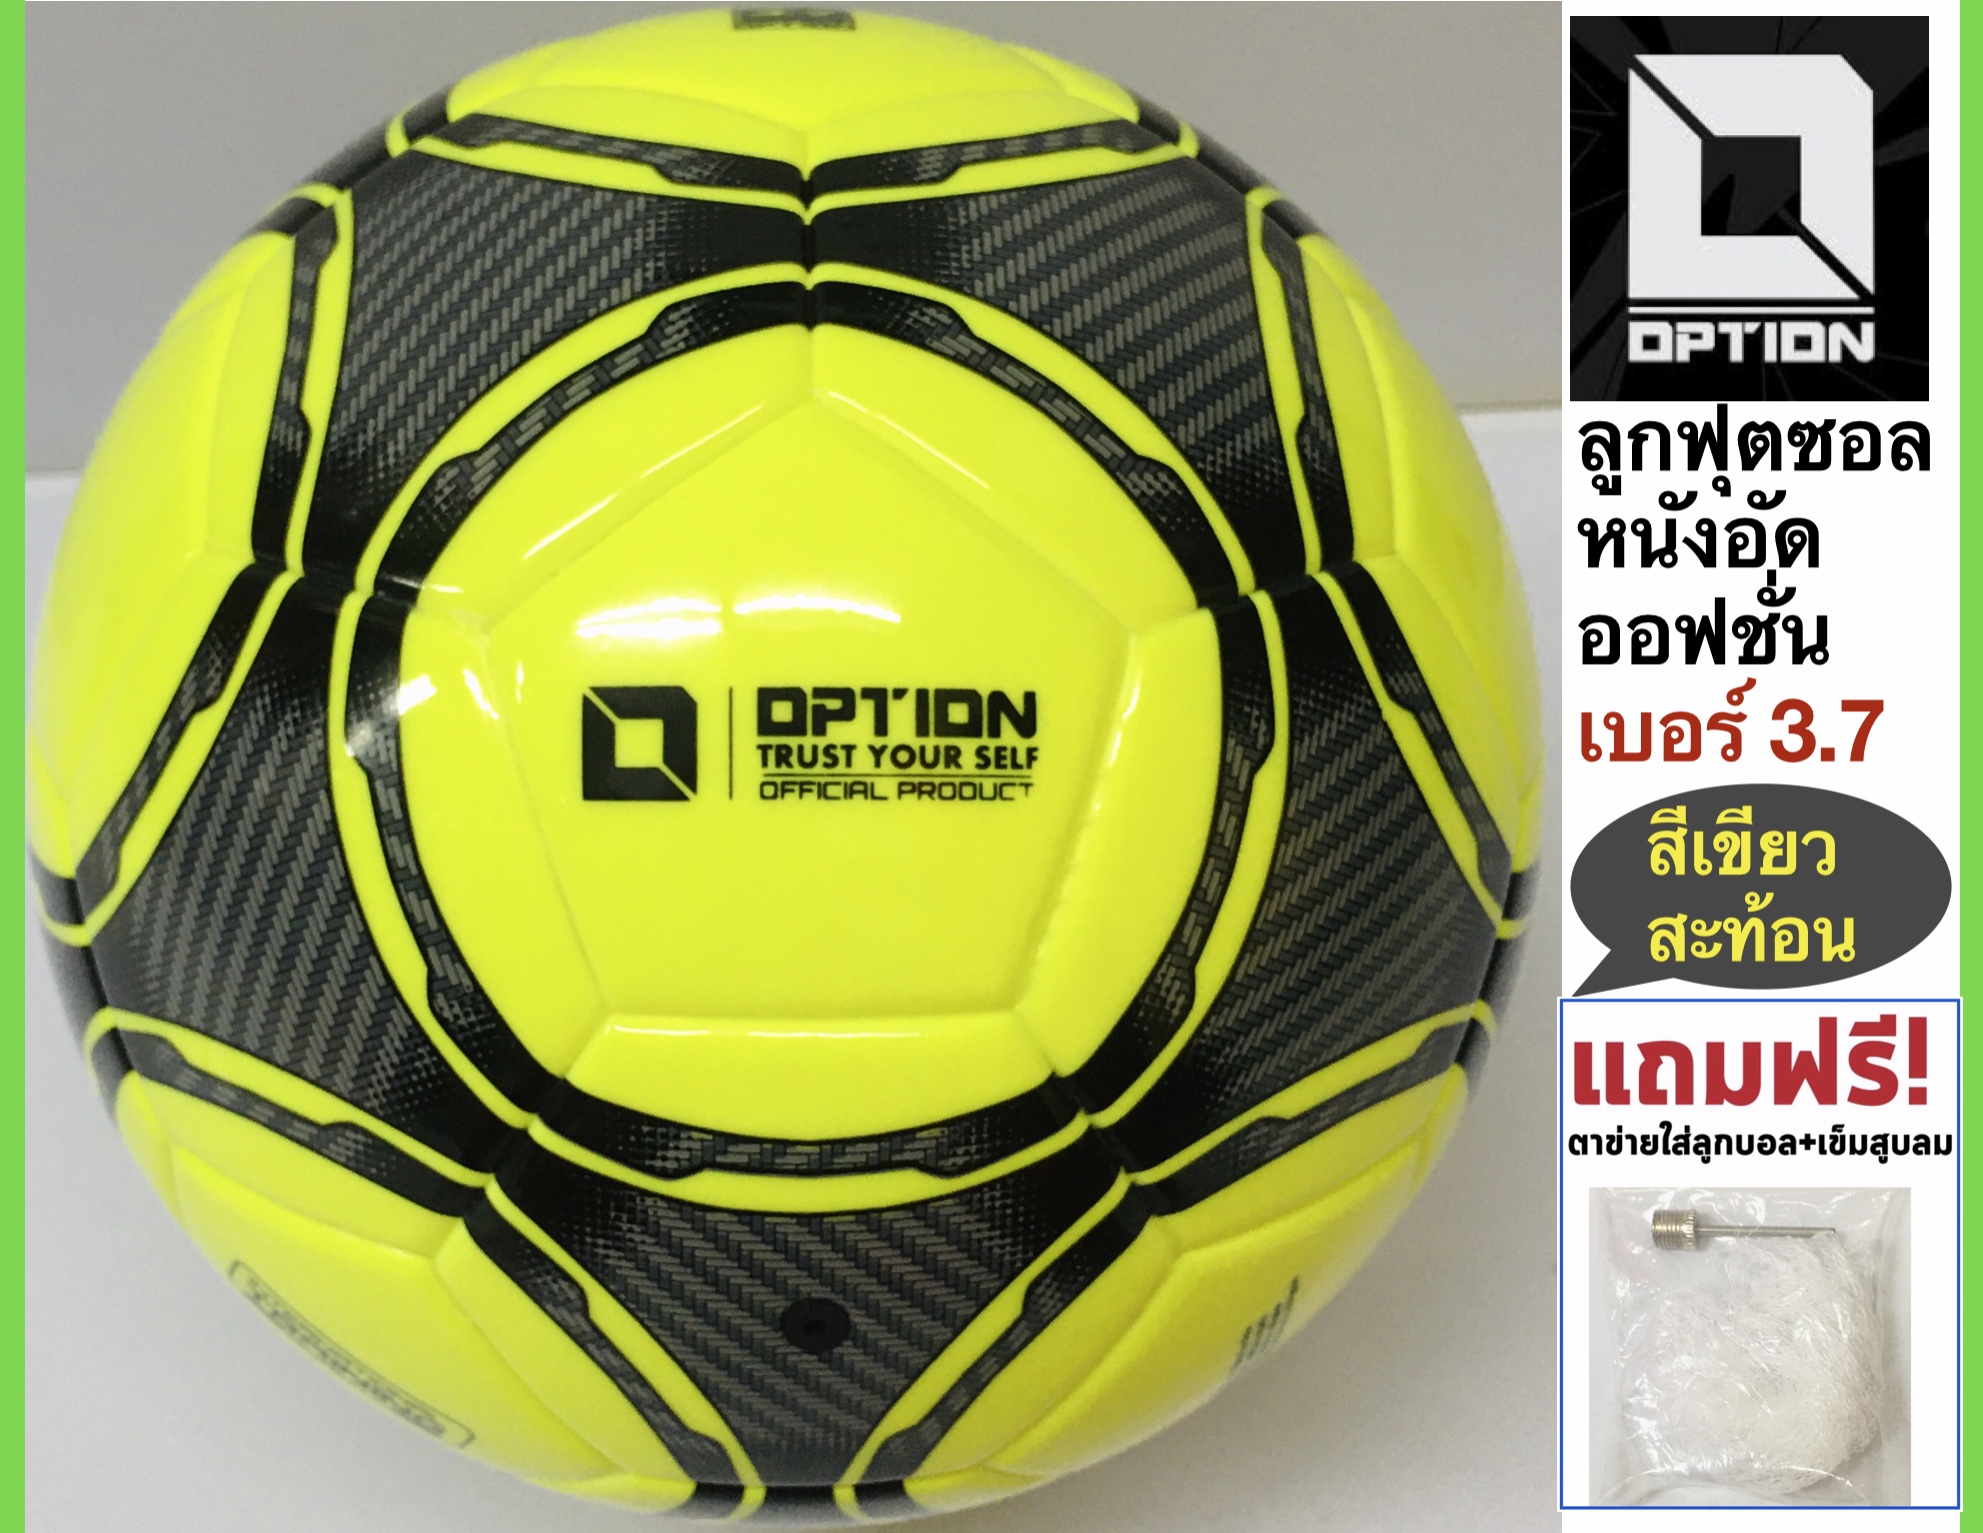 Option ลูกฟุตซอลหนังอัด เบอร์ 3.7 ออฟชั่น Futsal Ball แถมฟรี : ตาข่ายใส่ฟุตบอล และ เข็มสูบลม